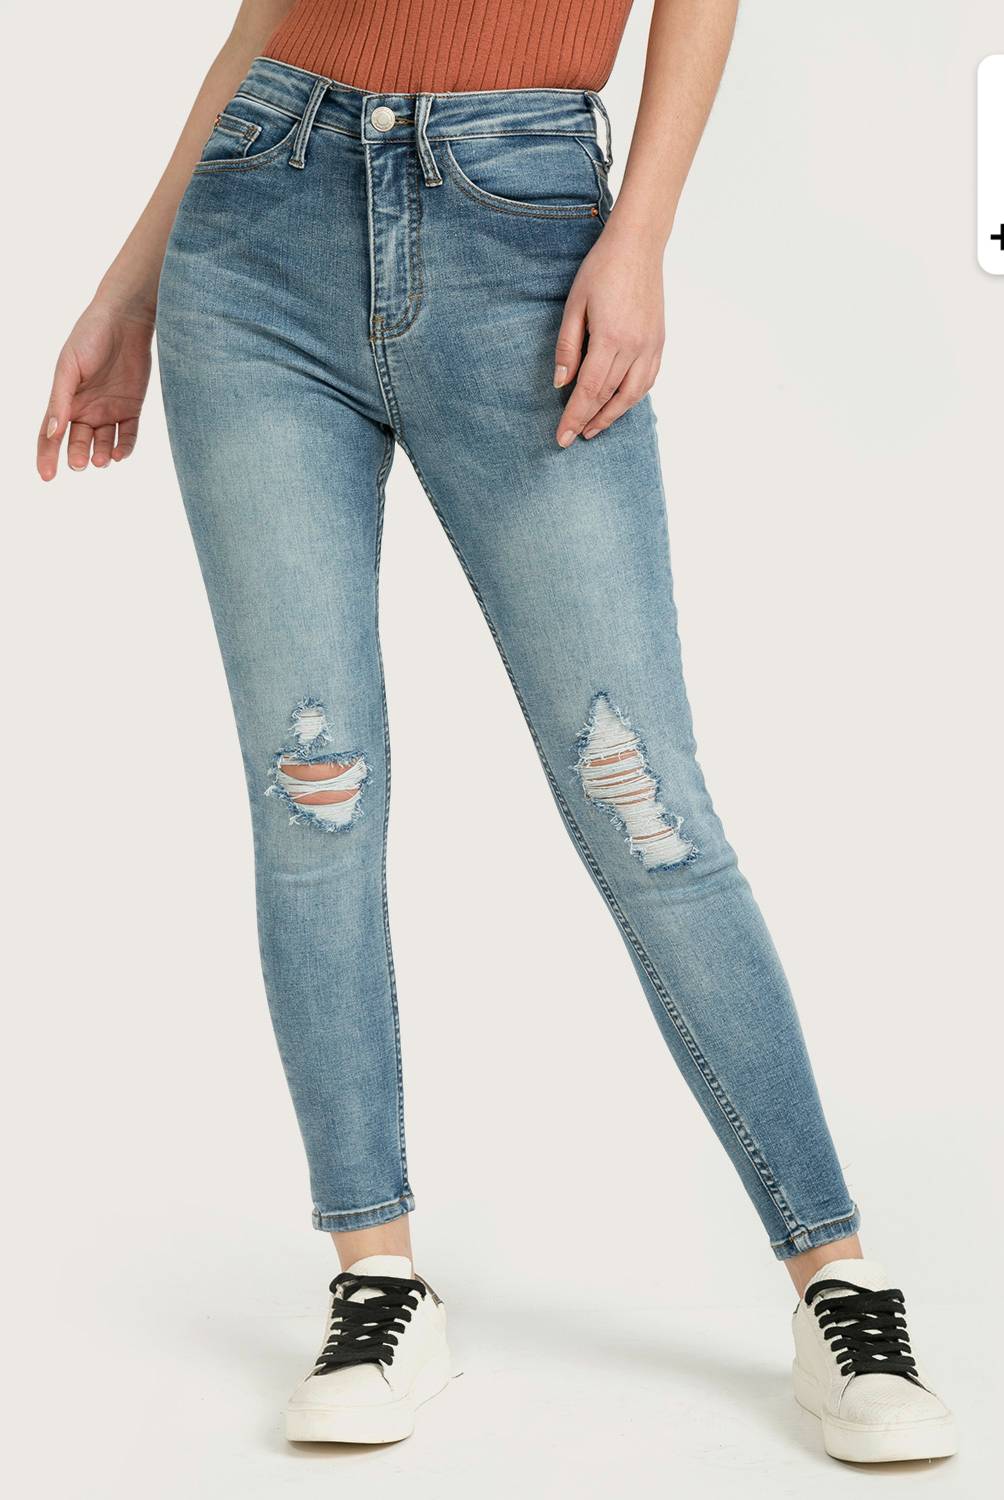 AMERICANINO - Jeans Mujer